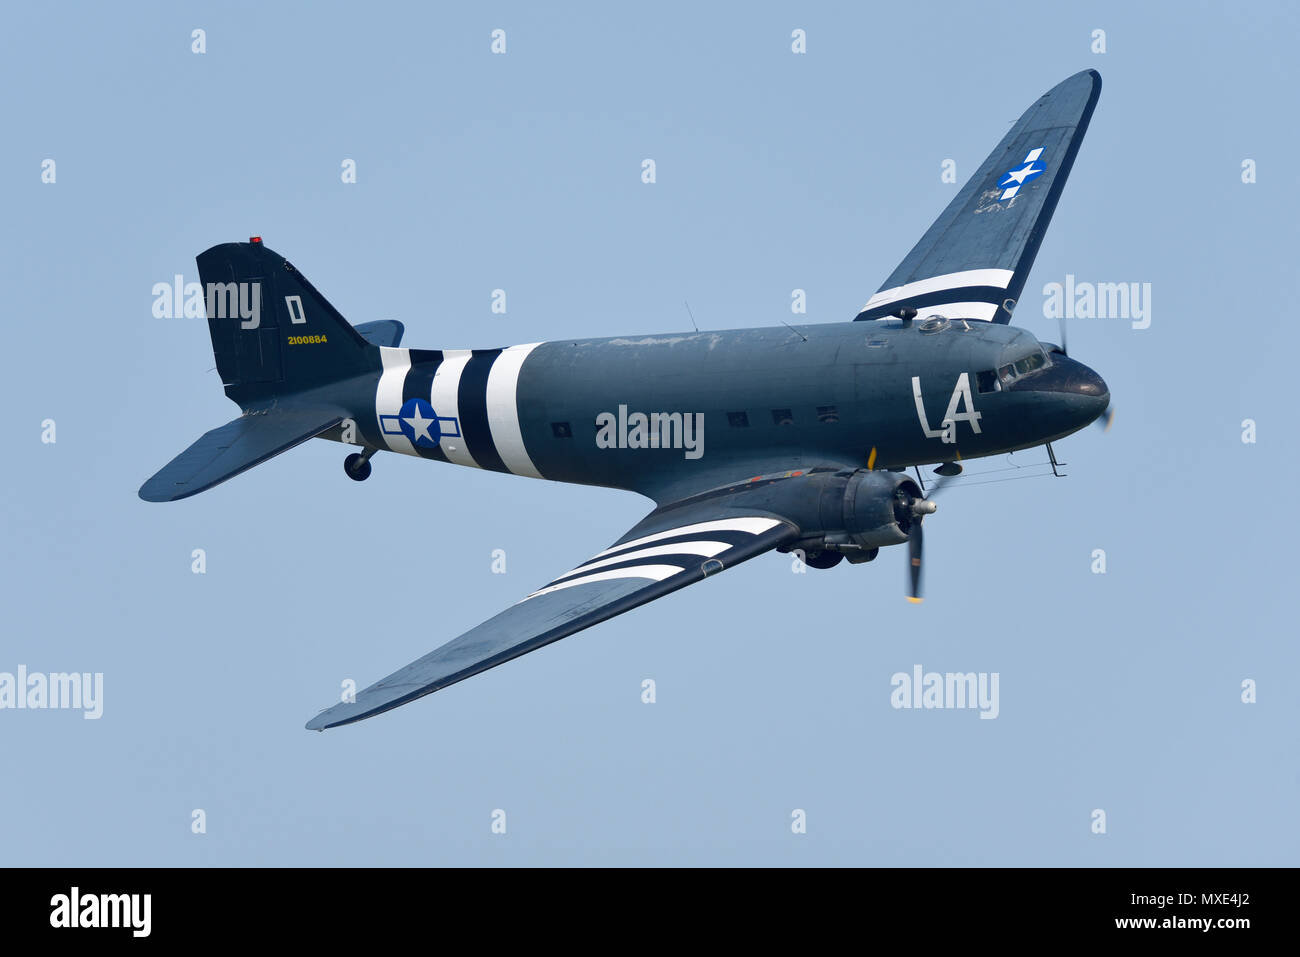 Douglas DC-3 Dakota, C-47 Skytrain. Second World War transport plane flying at an airshow. D-Day invasion stripes Stock Photo